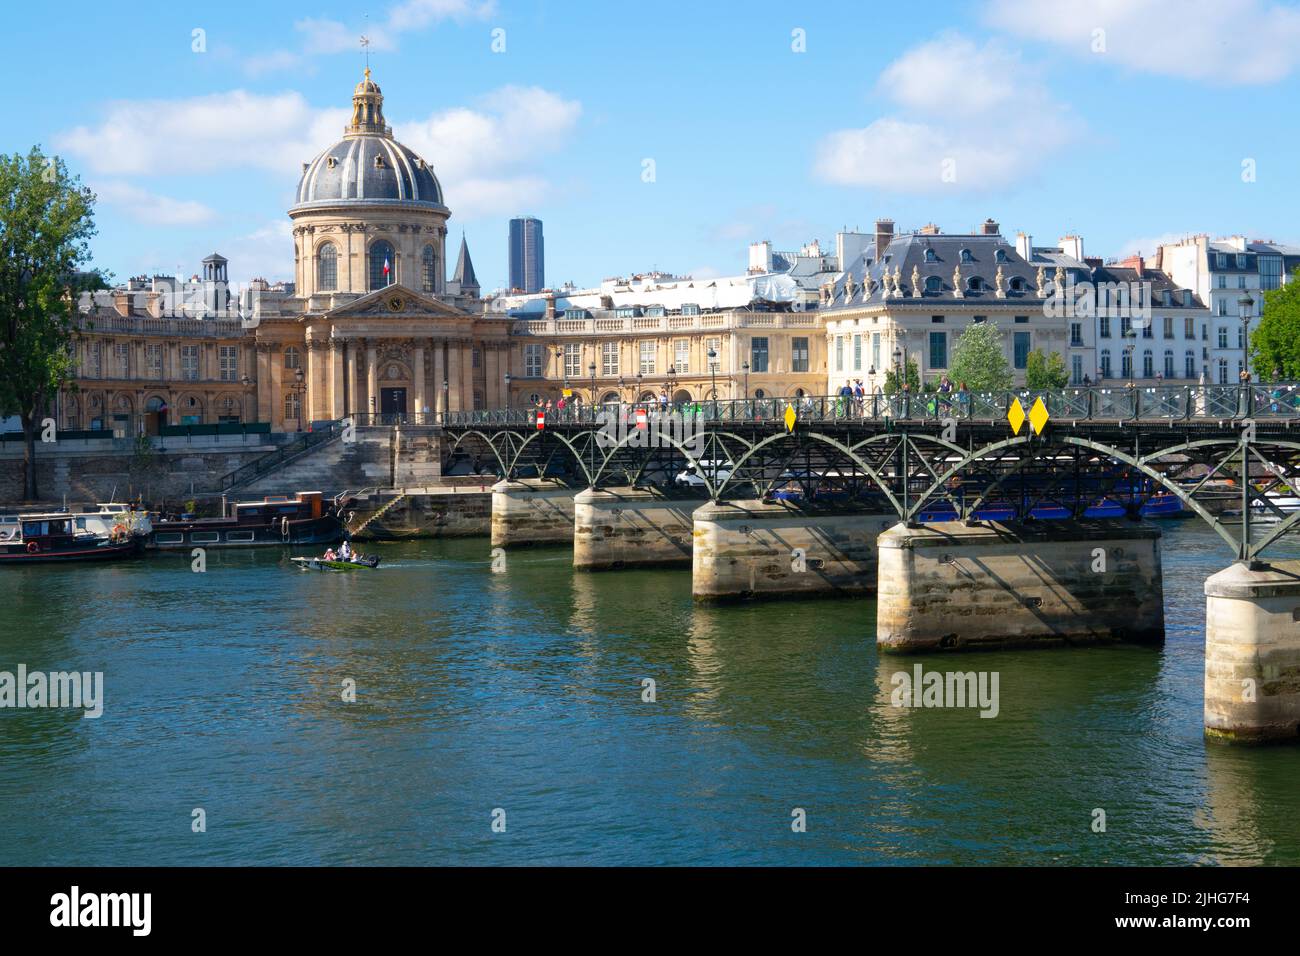 Pont des Arts o Passerelle des Arts puente peatonal a través del río Sena con la cúpula del Institut de France en el fondo París Francia Foto de stock